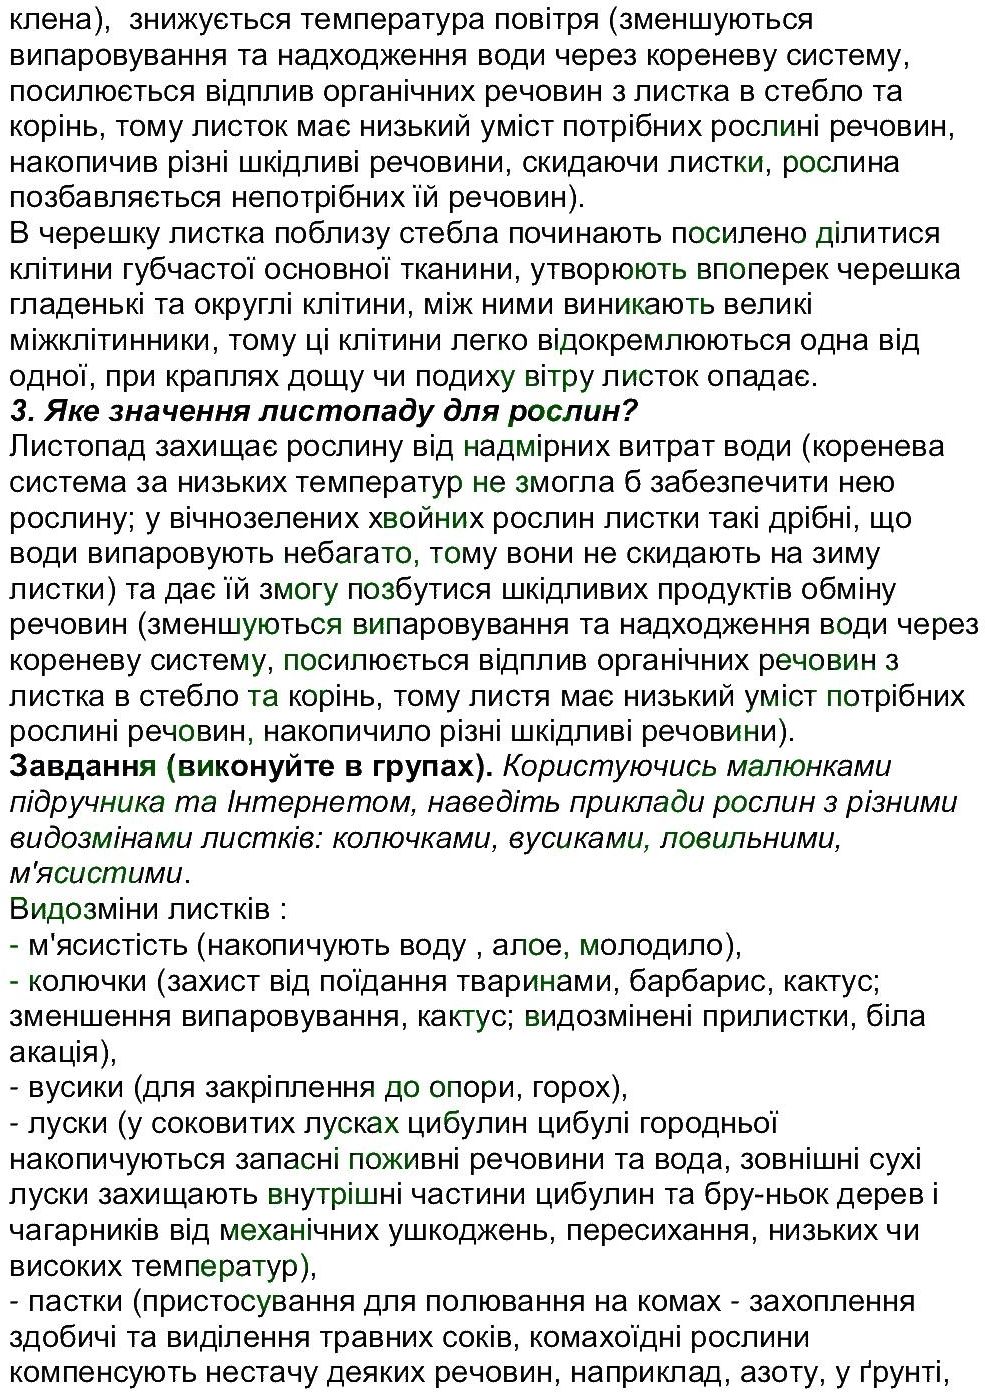 6-biologiya-li-ostapchenko-pg-balan-nyu-matyash-2016--tema-3-roslini-ст112-115-rnd1788.jpg